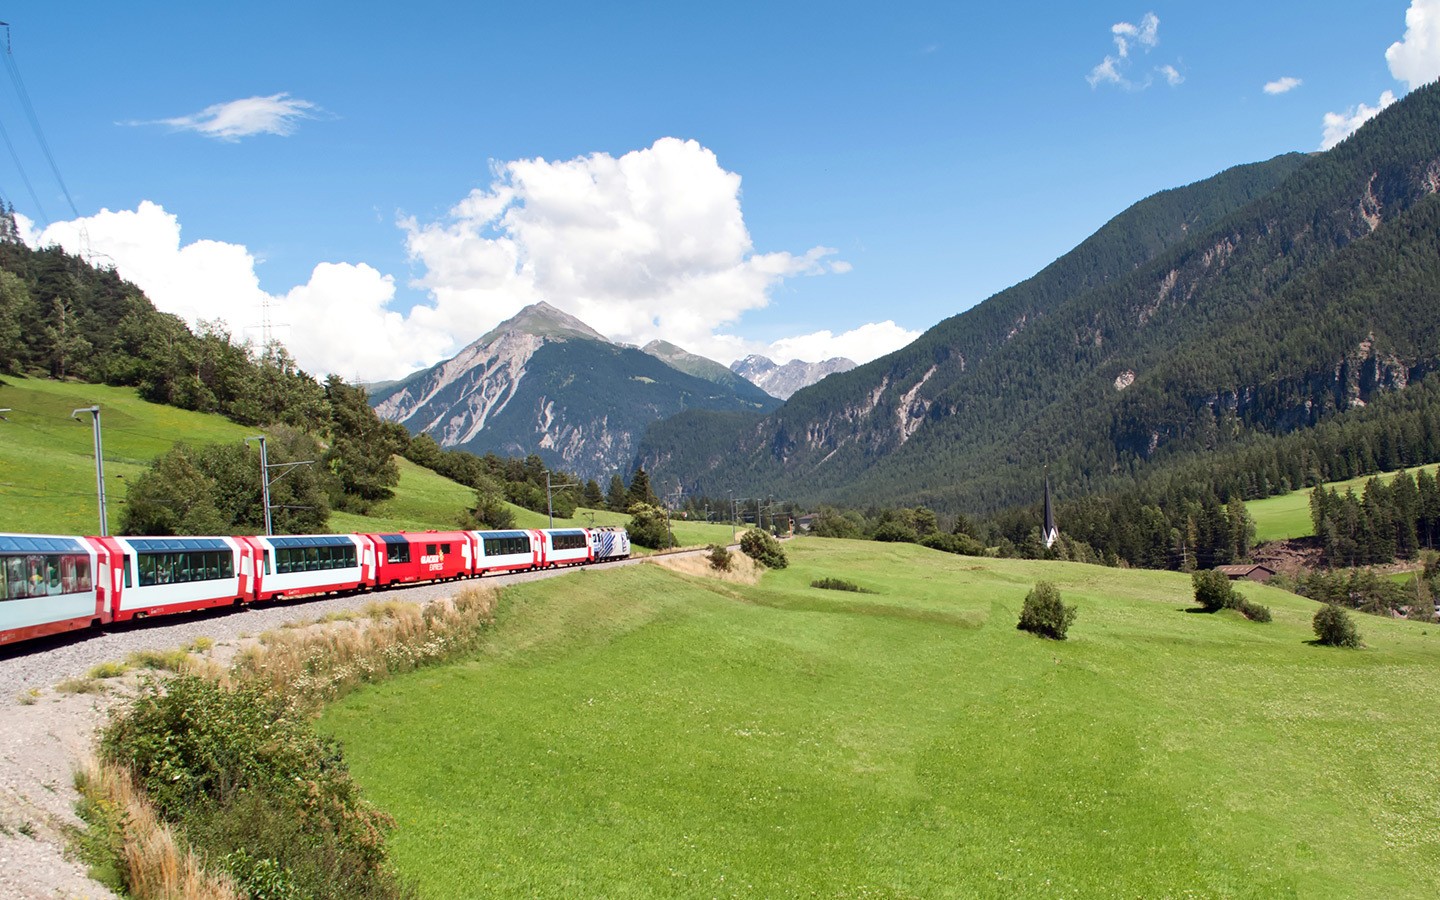 rail journey across europe